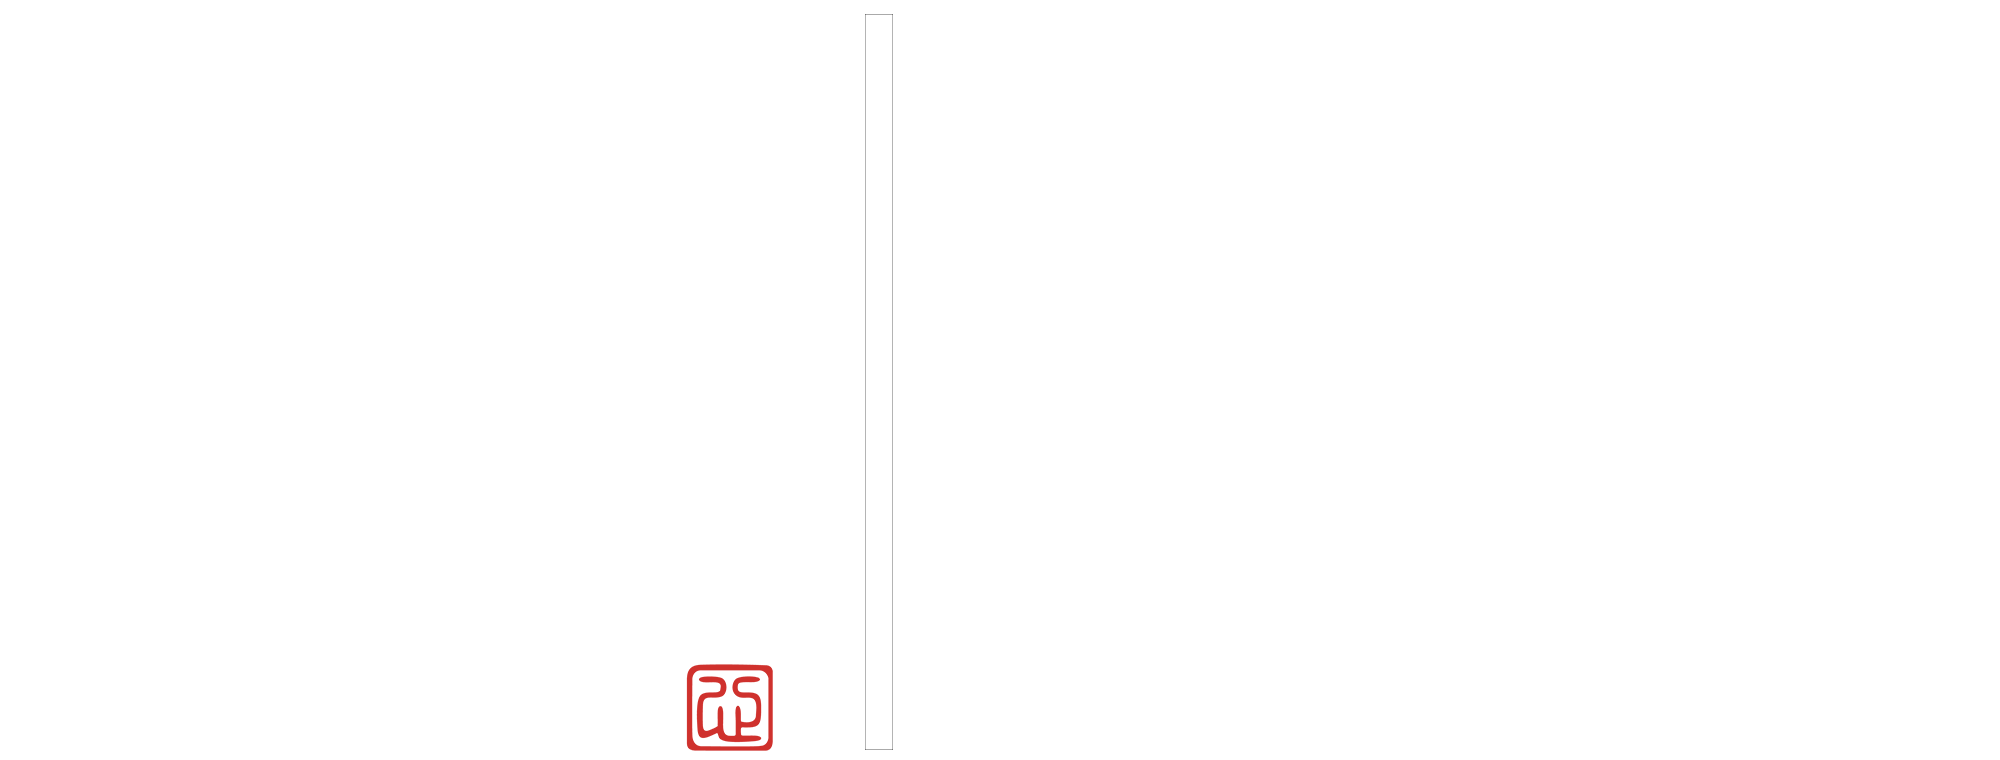 Napoli Bonsai Club